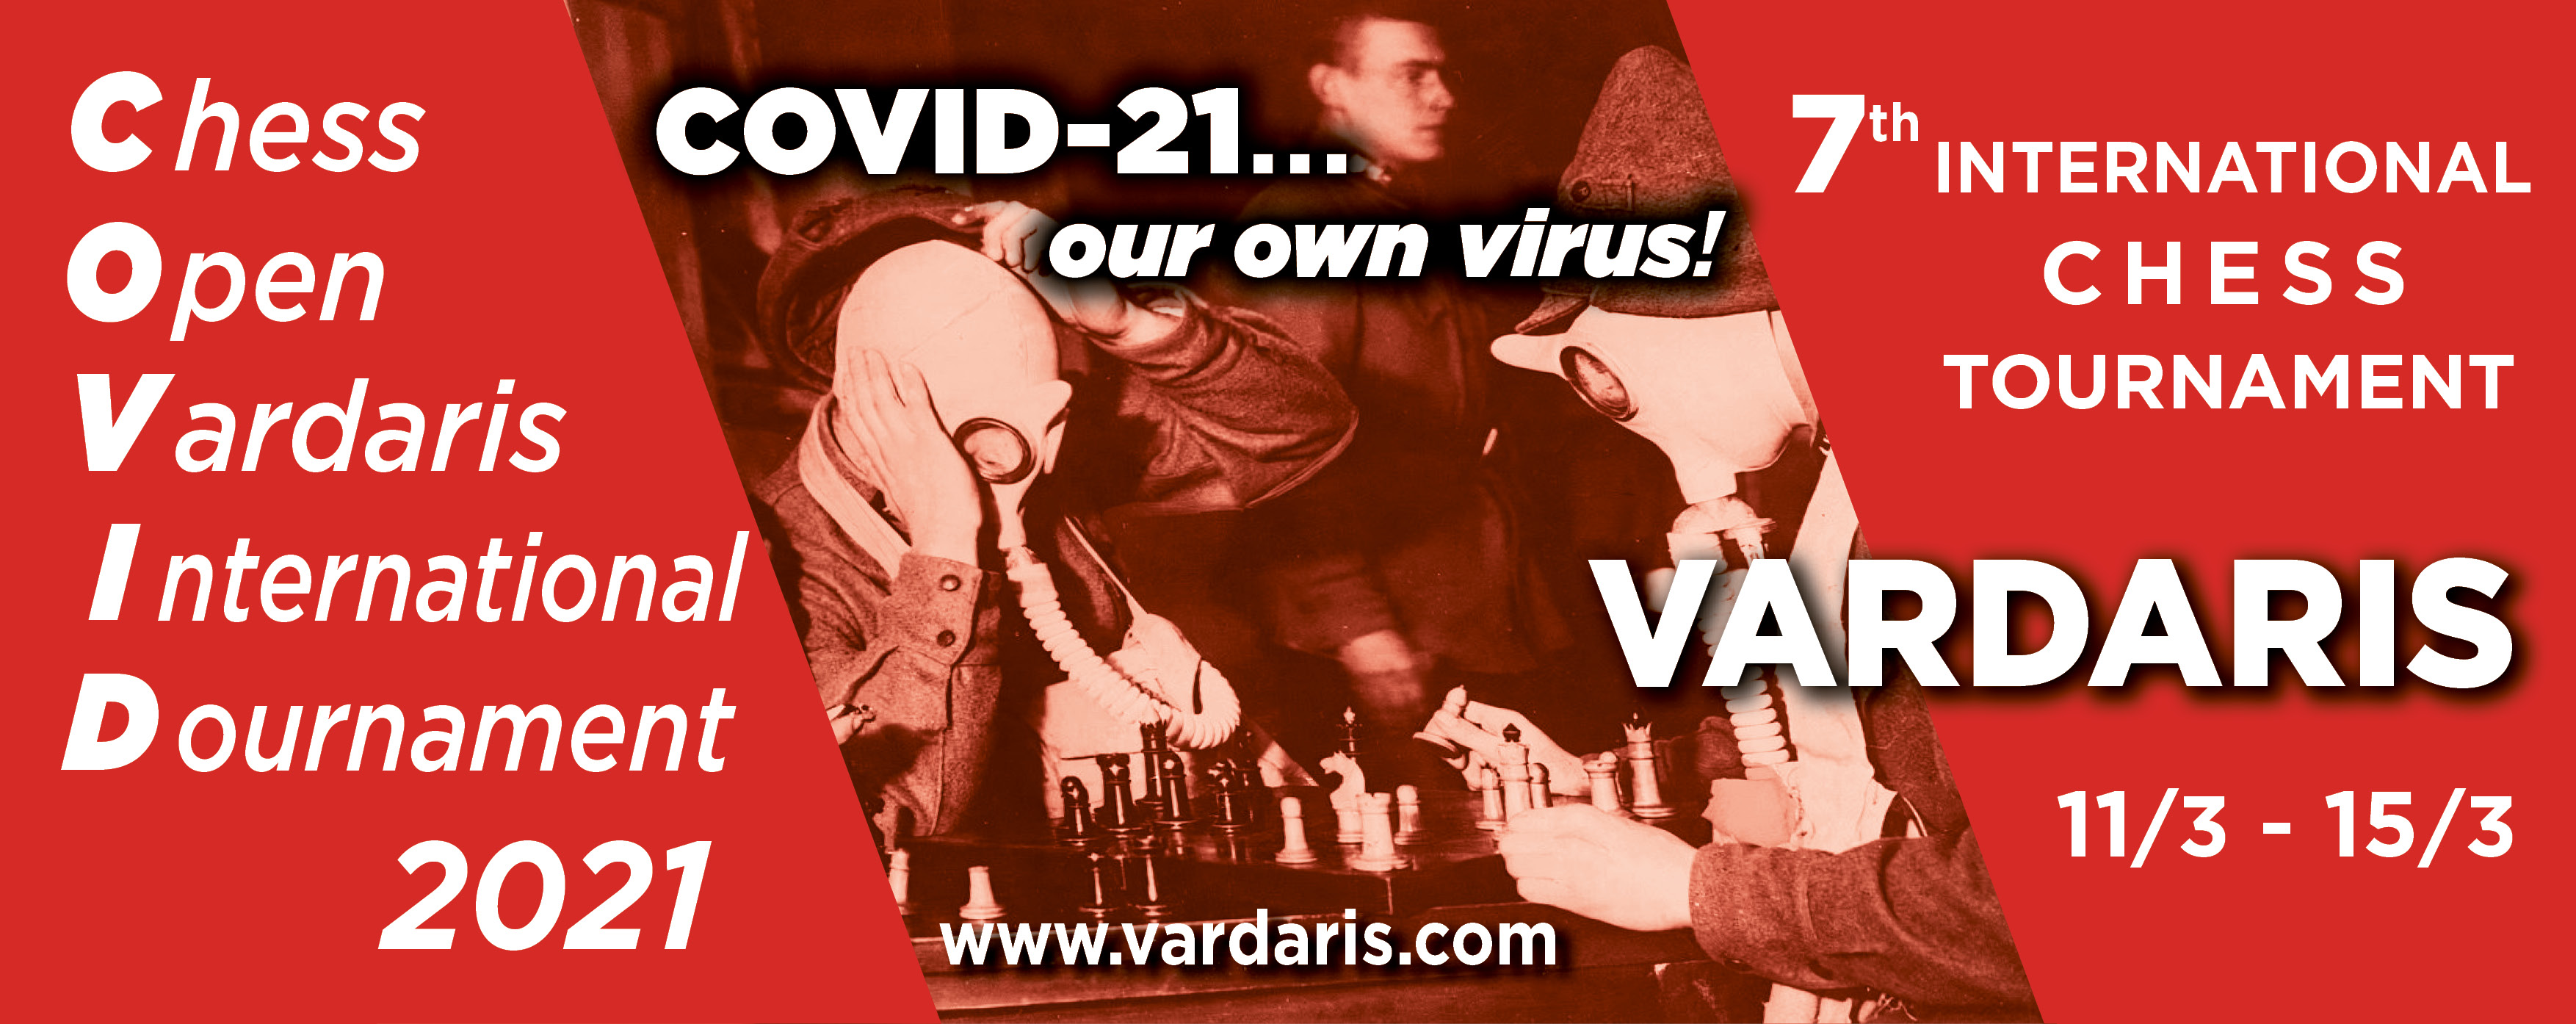 Announcement for the 7th International Chess Tournament "Vardaris"